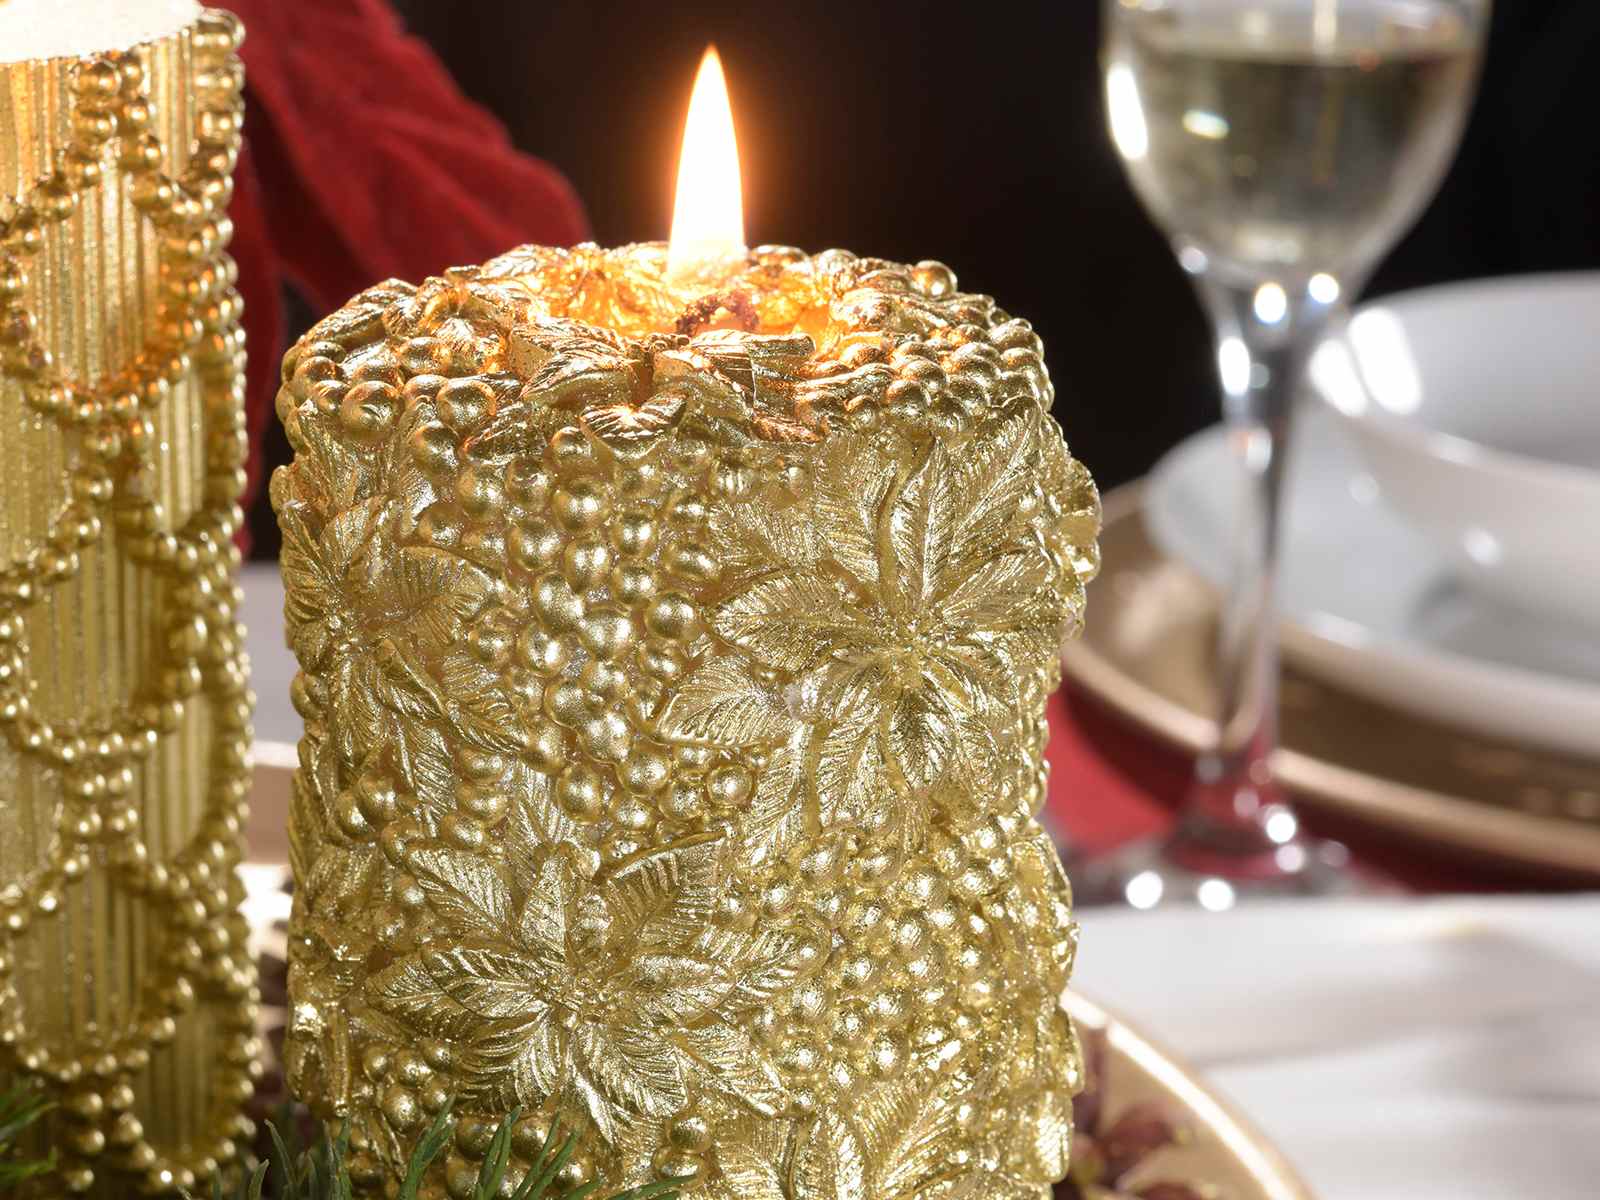 Grande bougie dorée avec décorations en relief en emballage (14.14